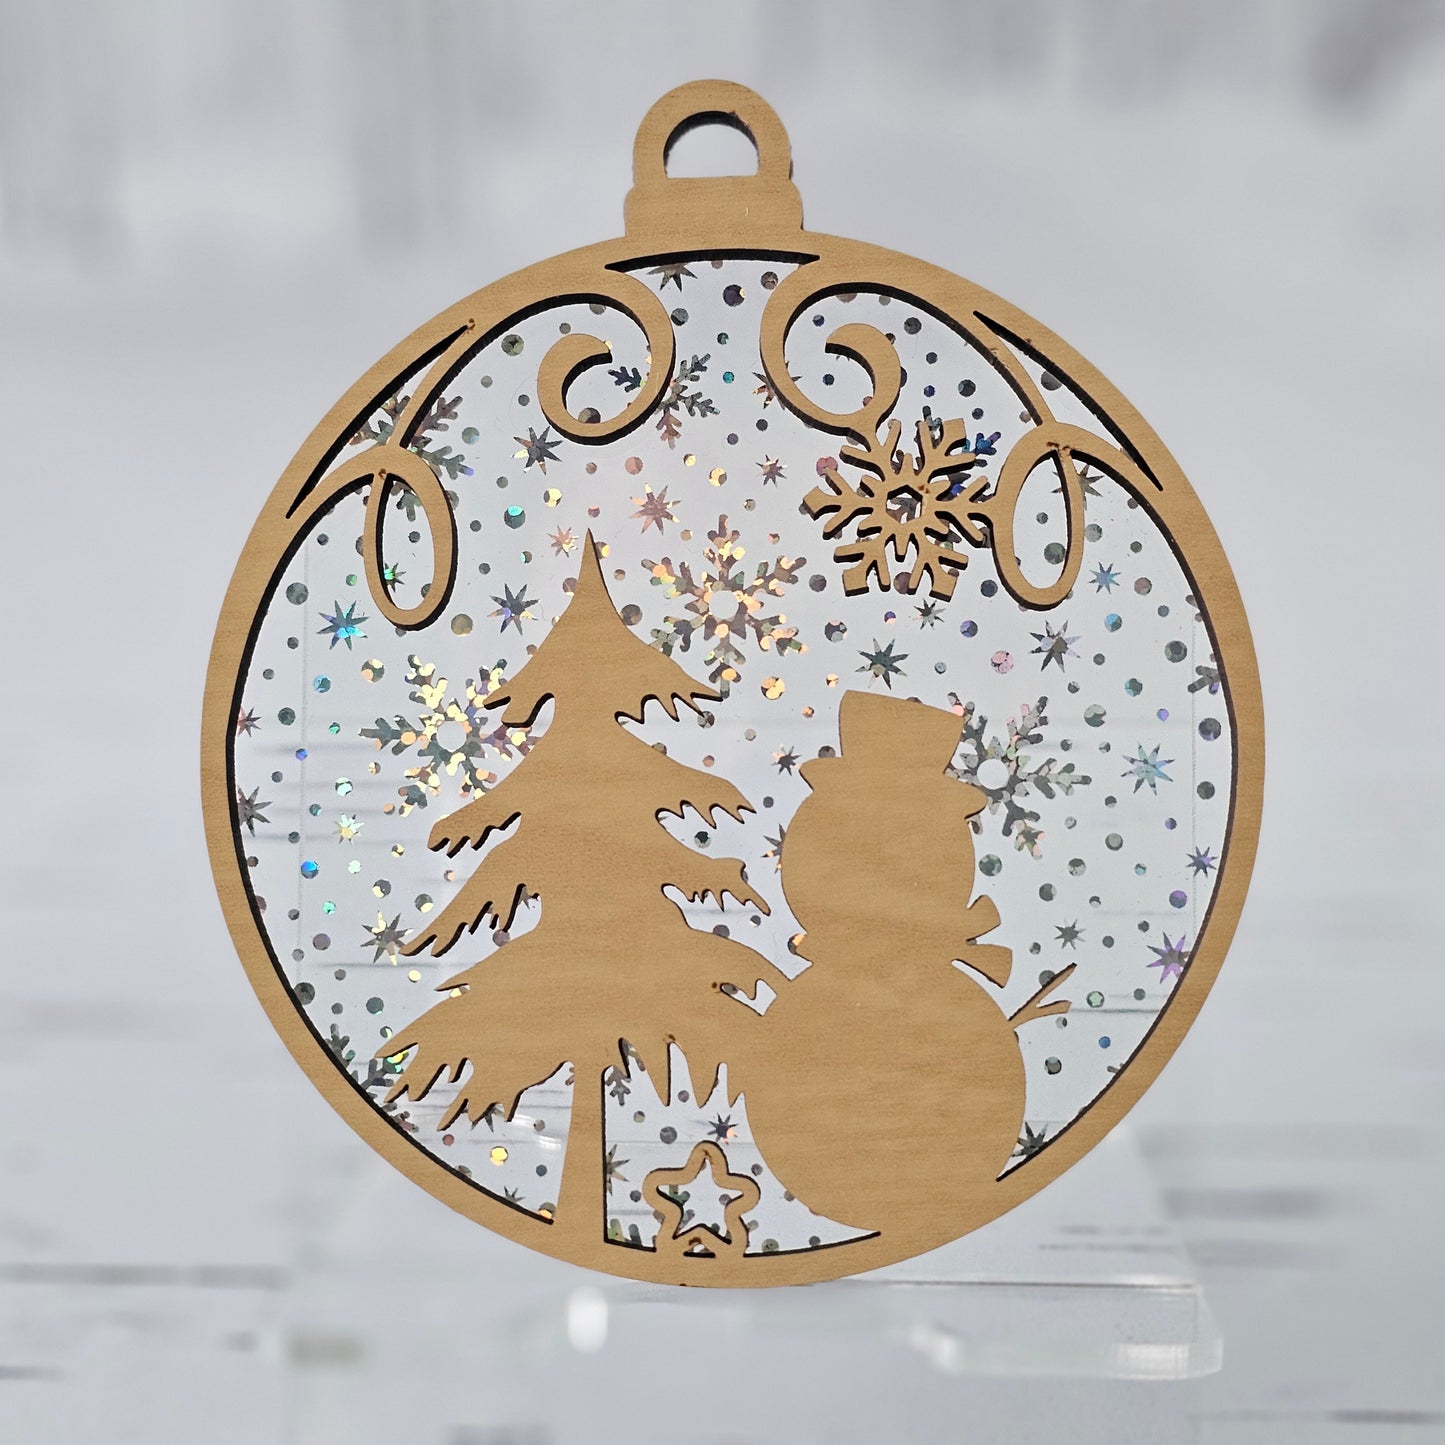 Snowman Ornament - Translucent Iridescent Snowflakes